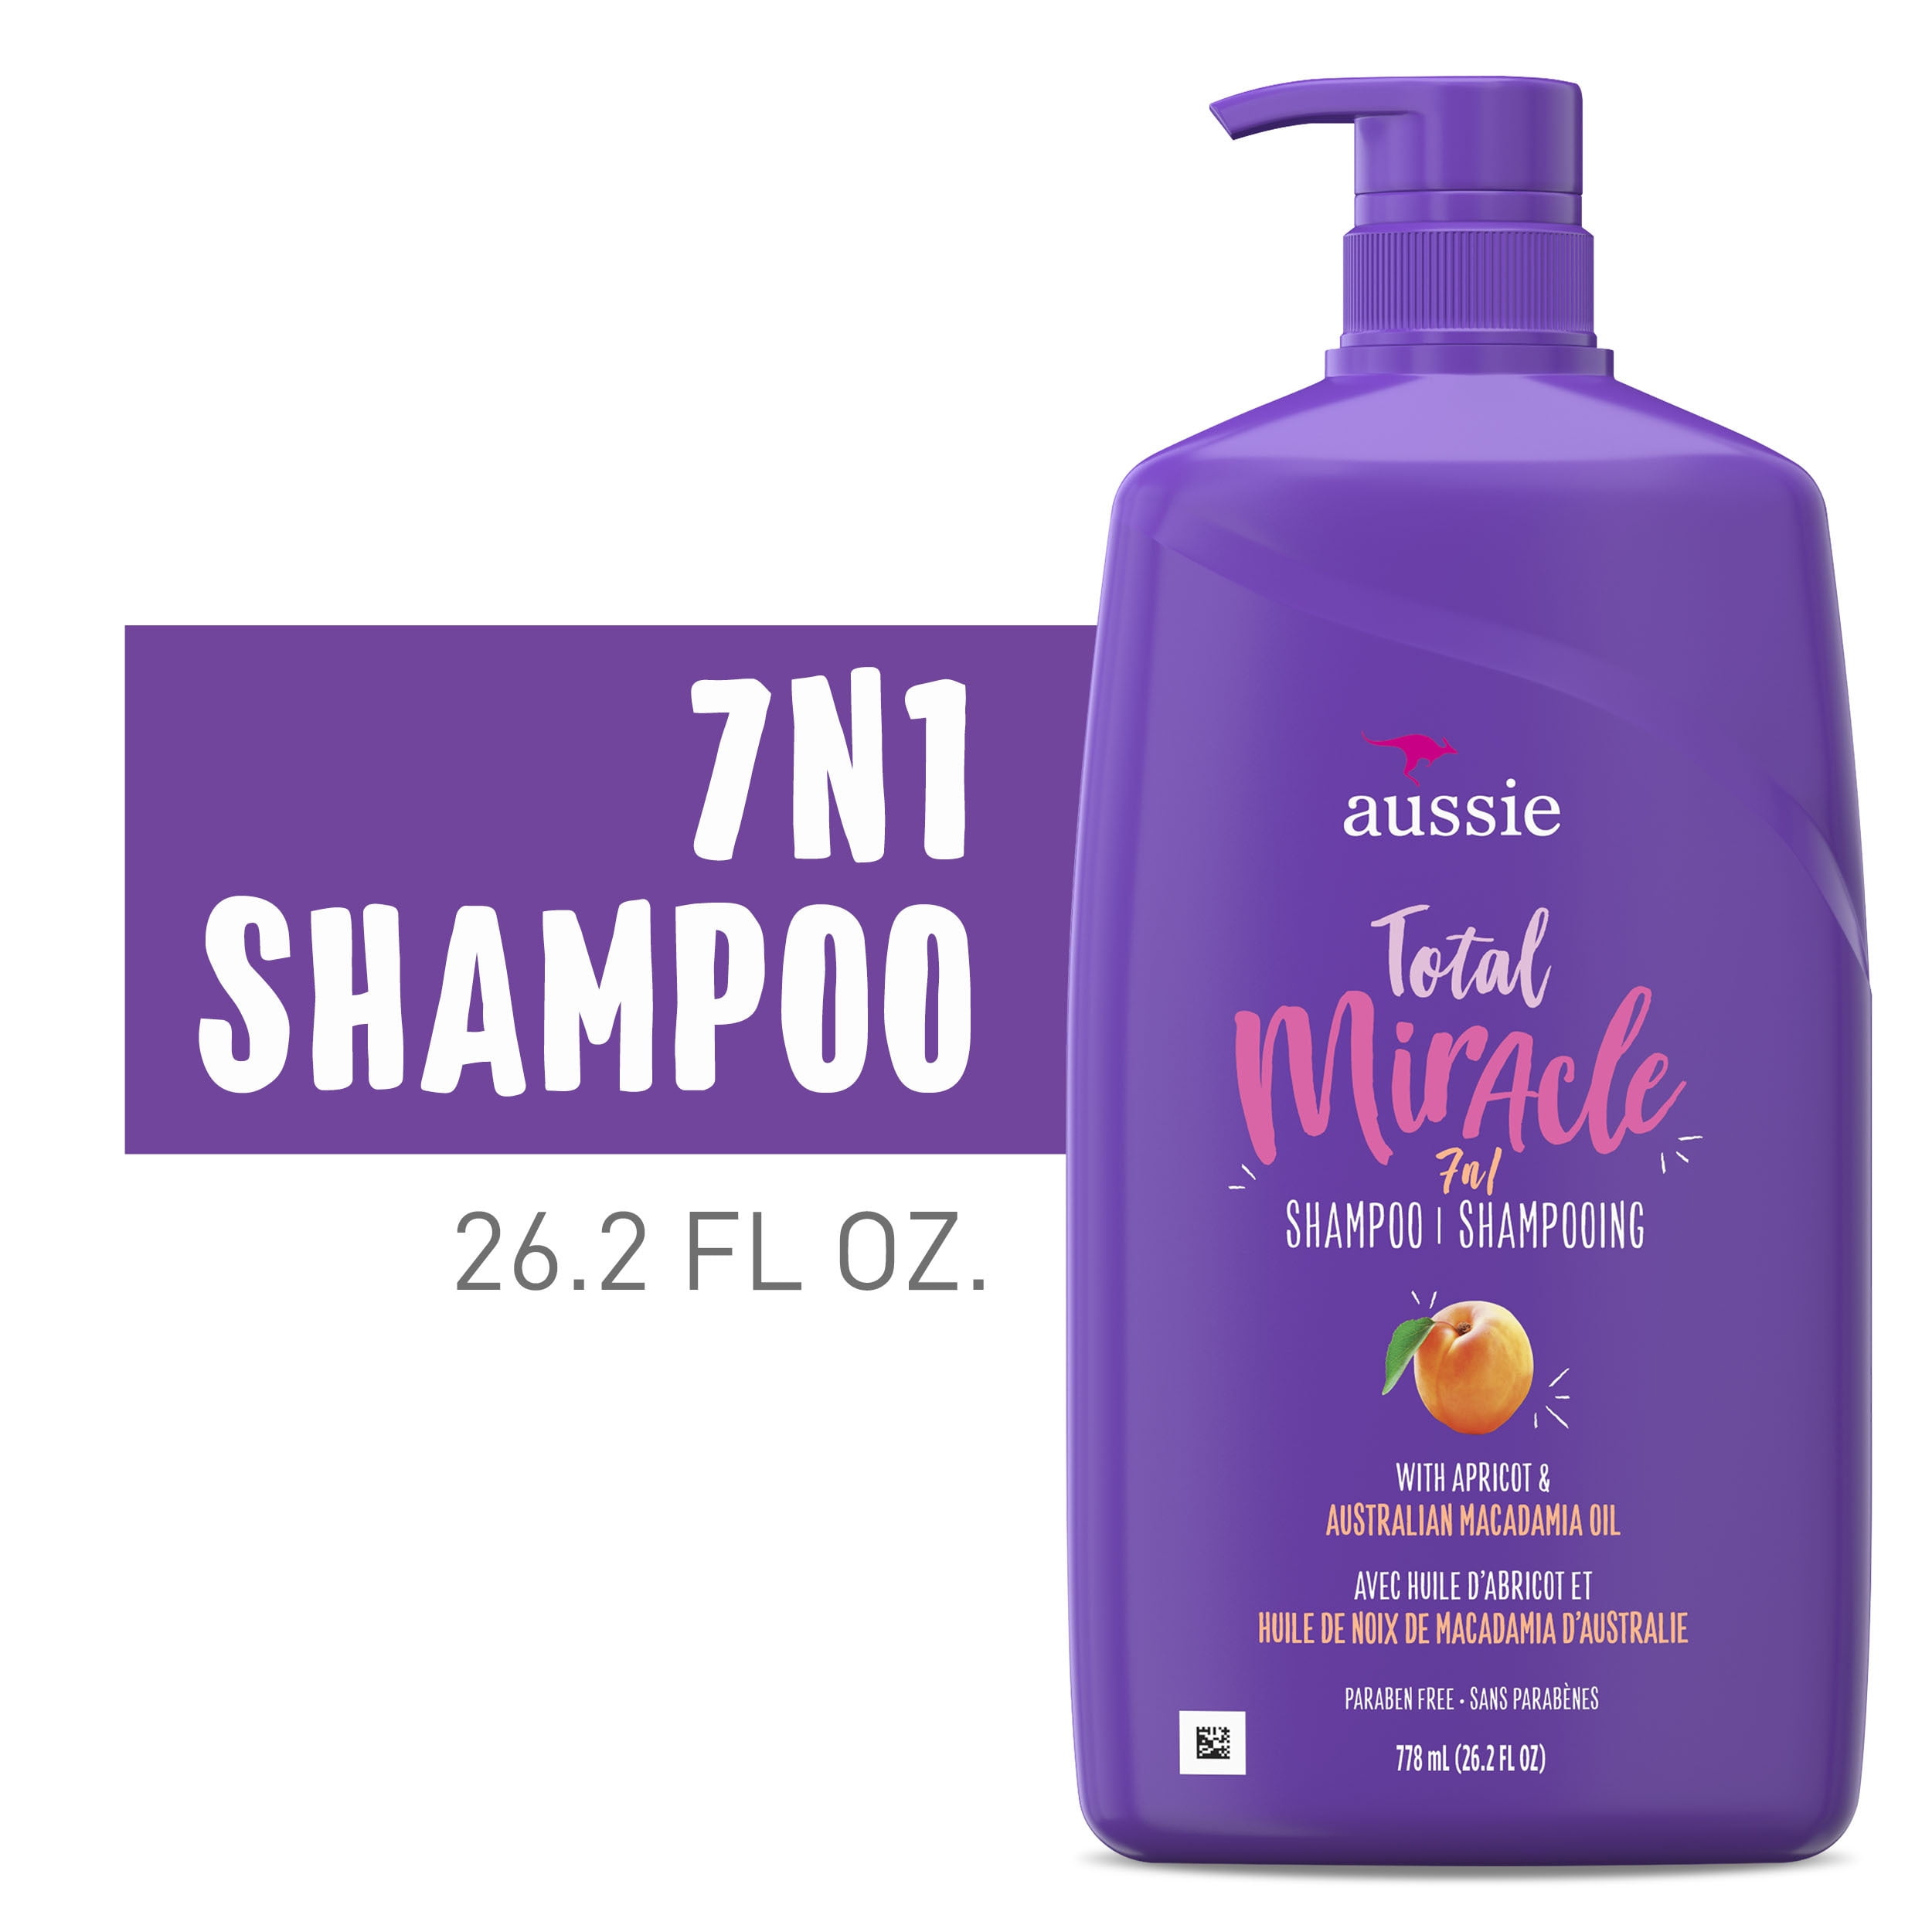 Ydmyg Hospital Far Aussie Total Miracle Shampoo, Paraben Free, for All Hair Types 26.2 fl oz -  Walmart.com